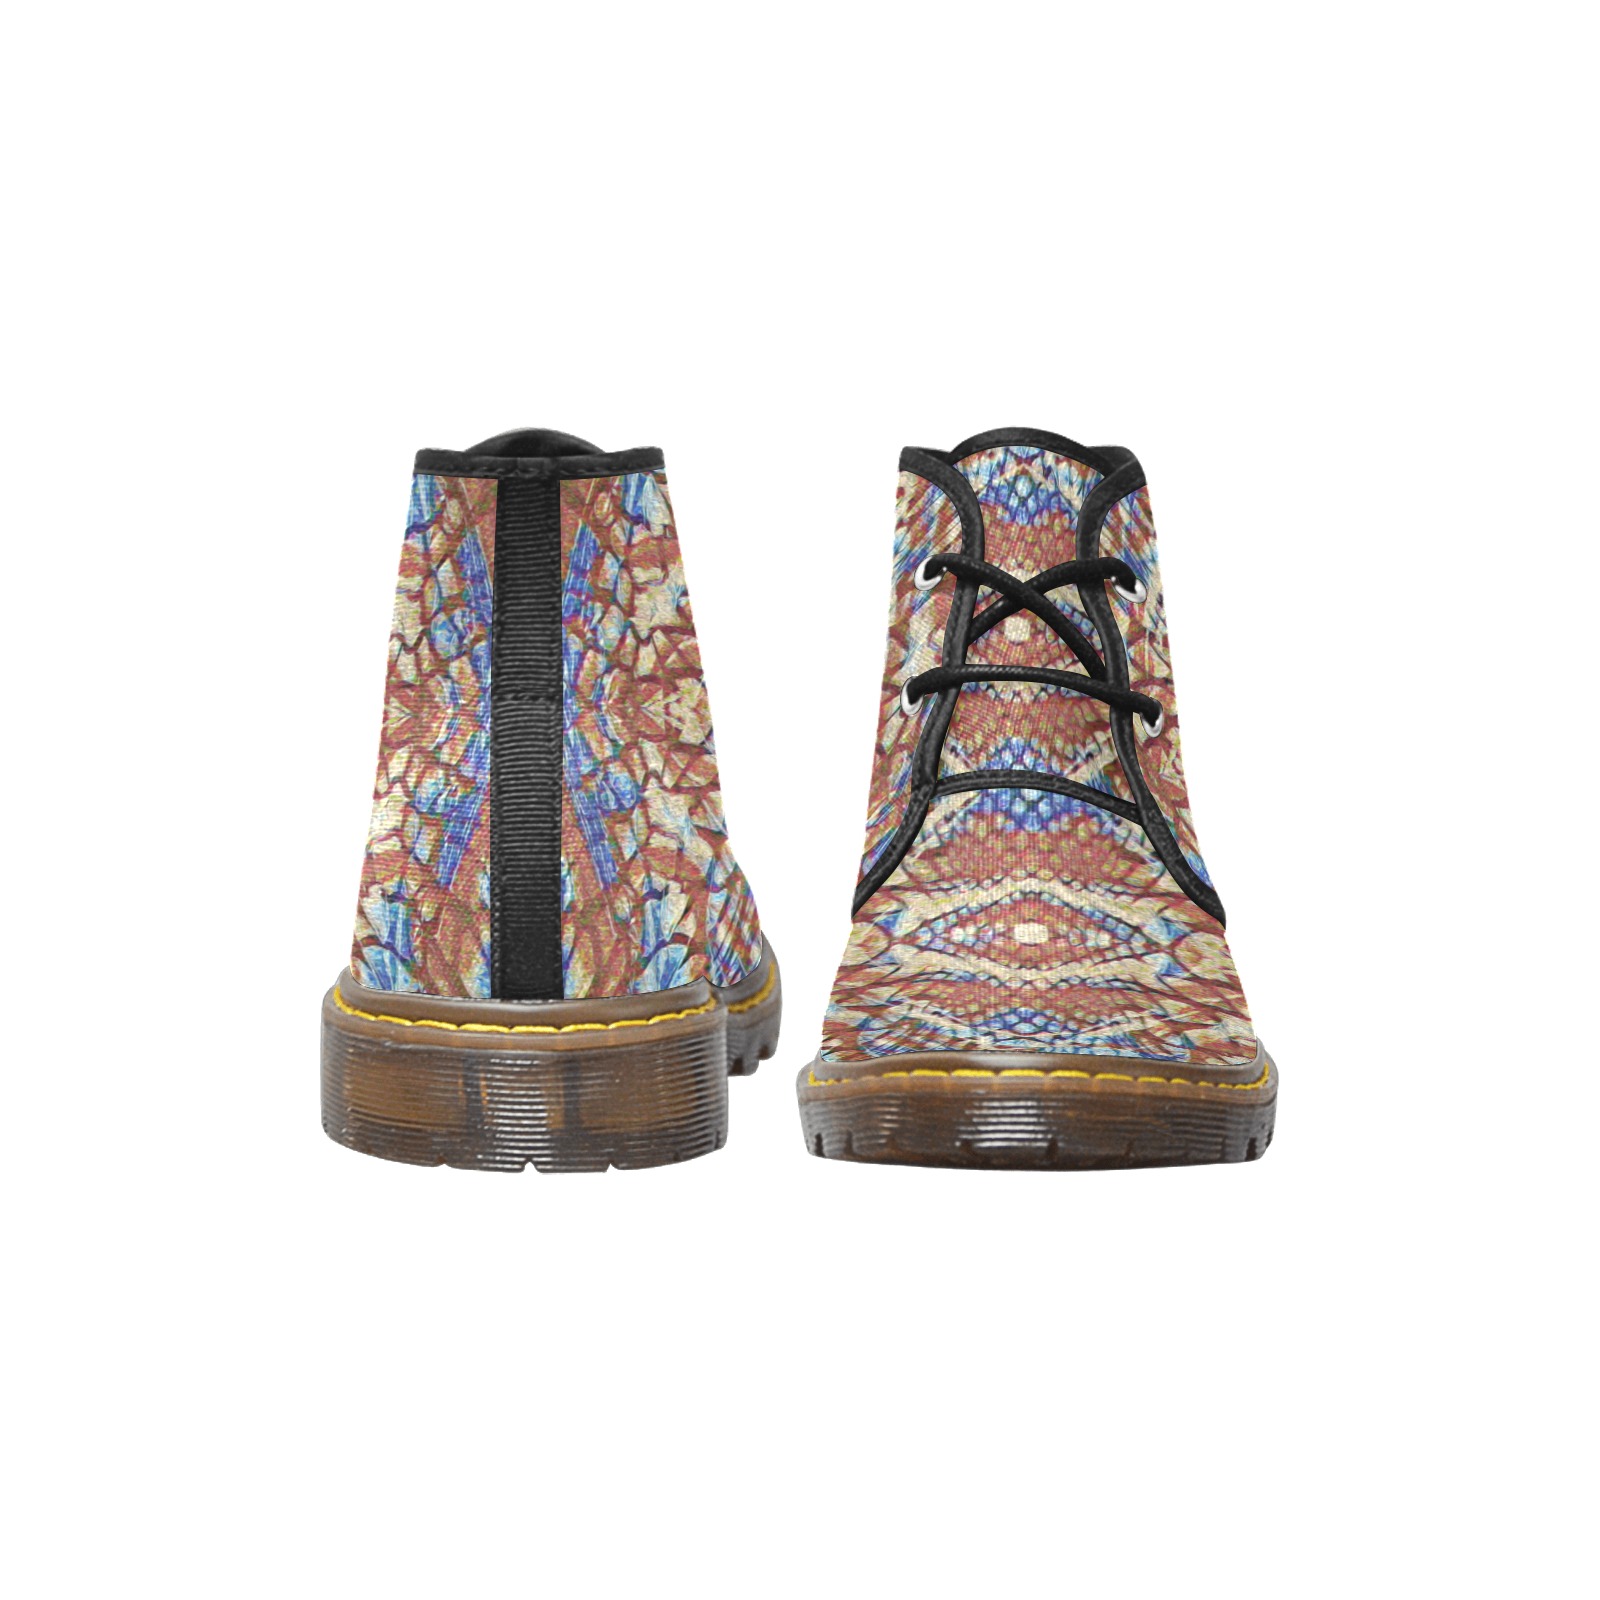 Tribal II Women's Canvas Chukka Boots (Model 2402-1)